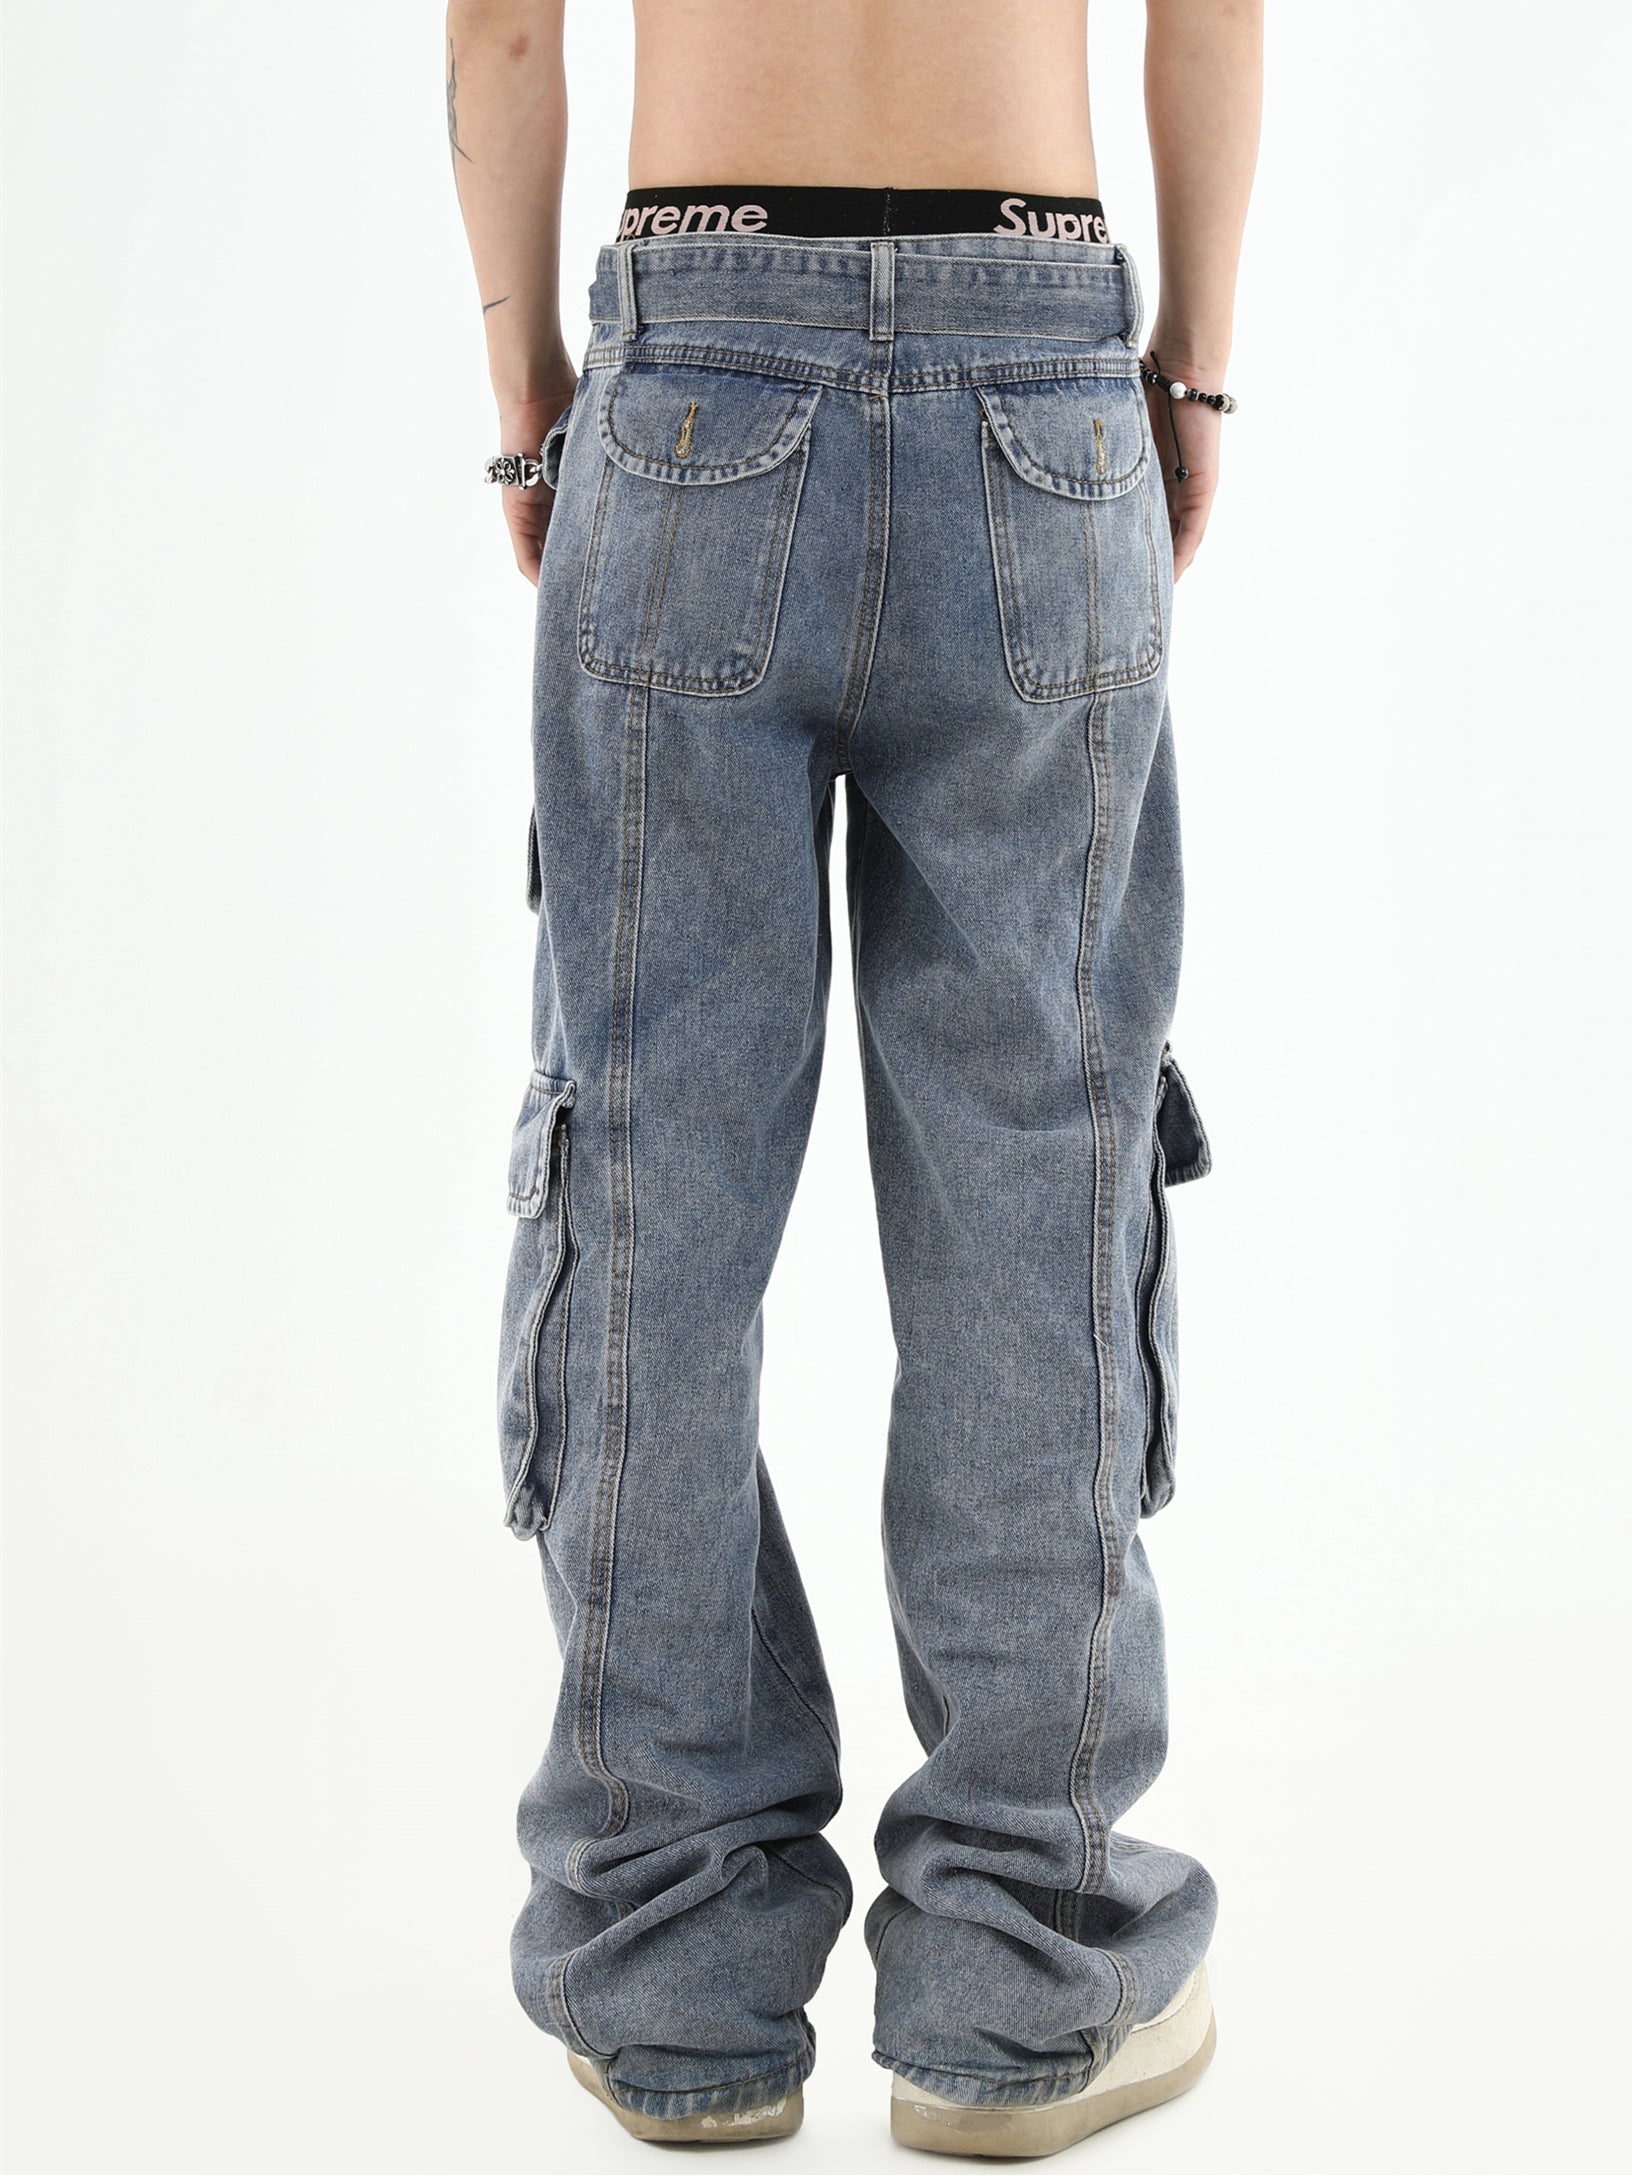 Vintage Wash Multi-Pocket Denim Jeans - chiclara